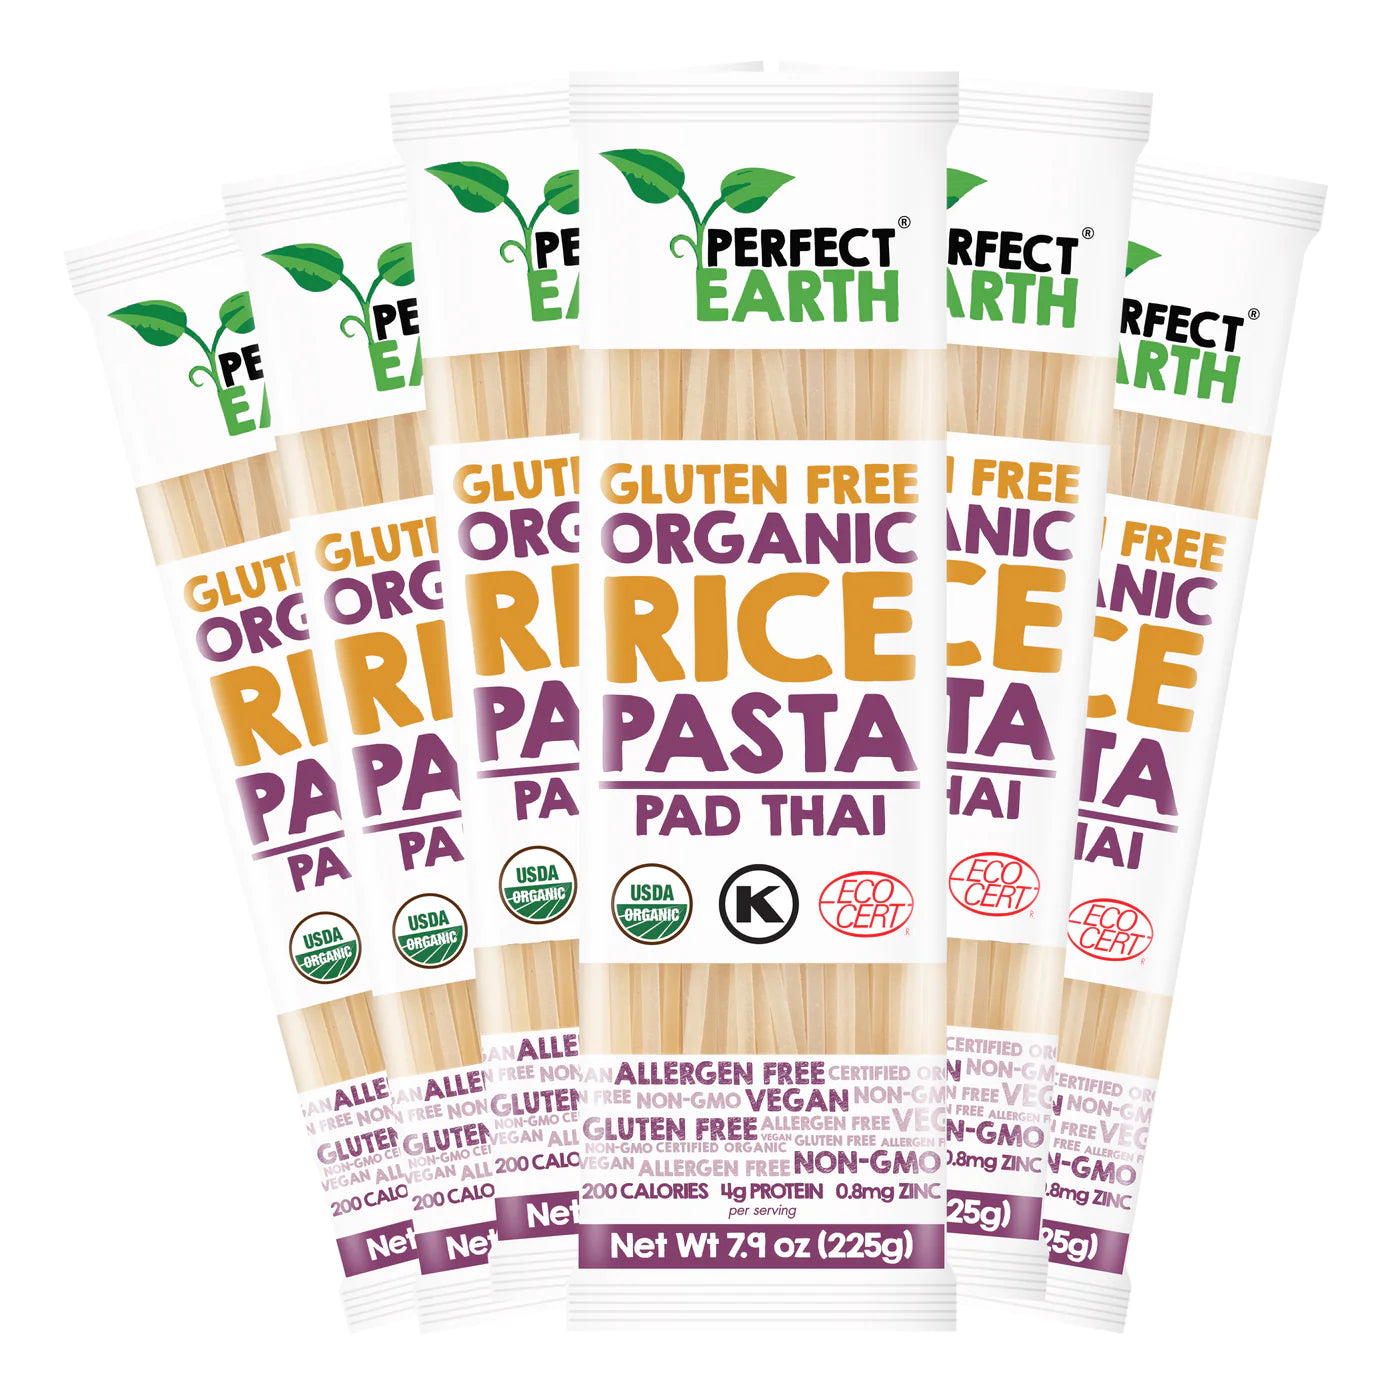 Perfect Earth - Organic Rice Pasta Pad Thai - 225g